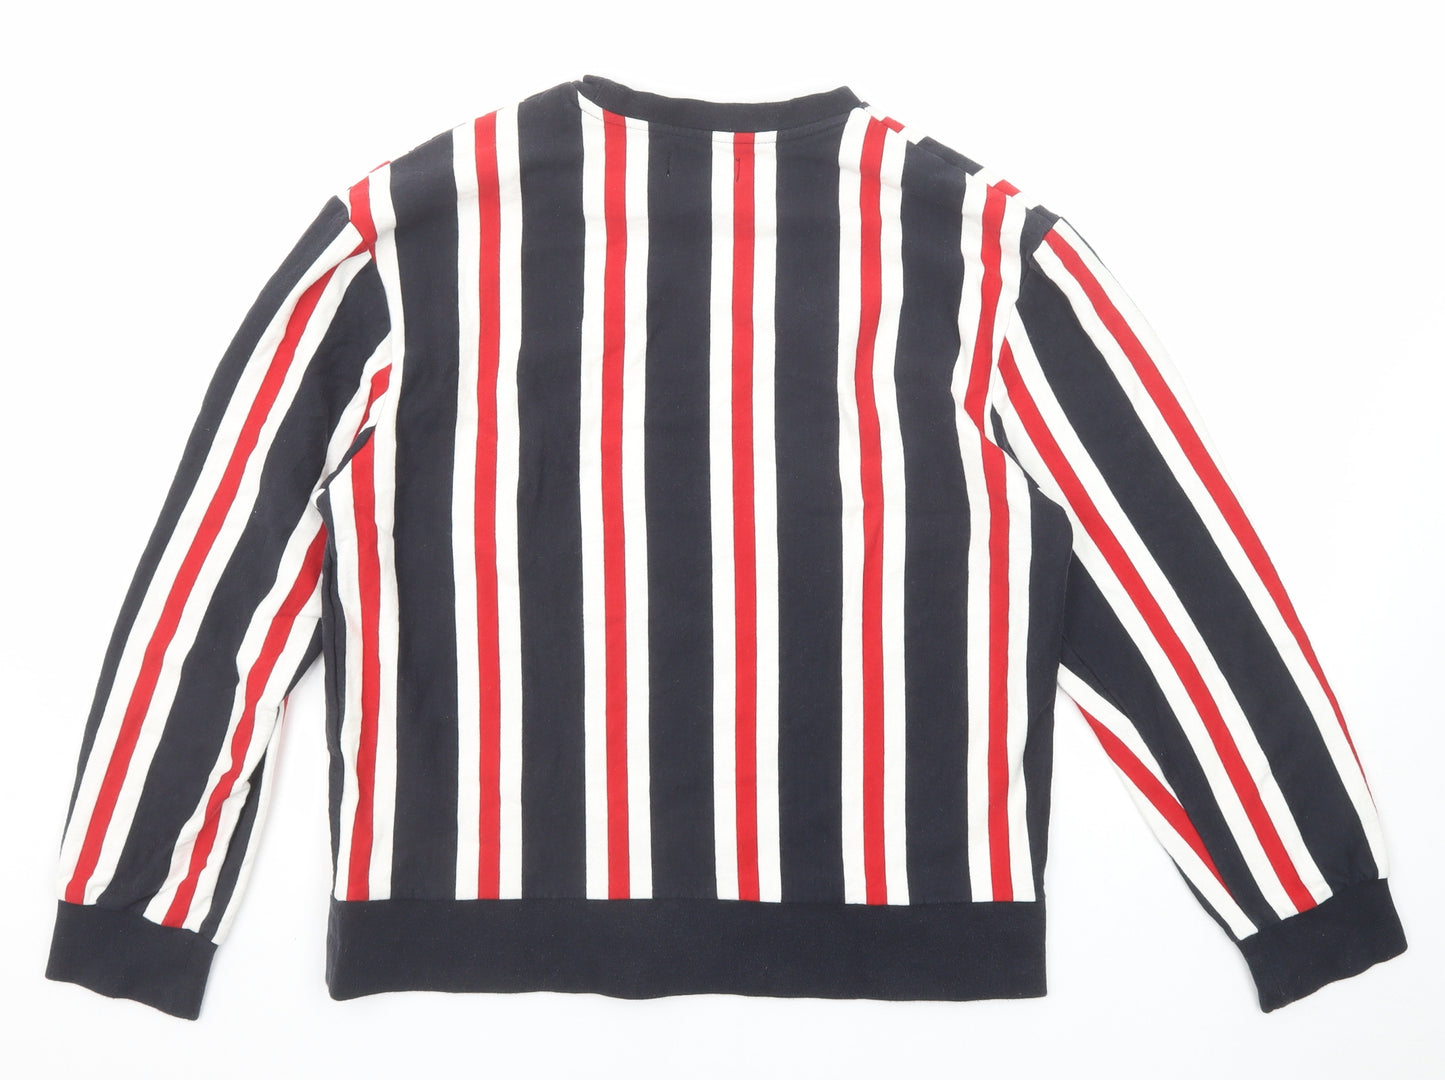 Topman Mens Multicoloured Striped Cotton Pullover Sweatshirt Size XS